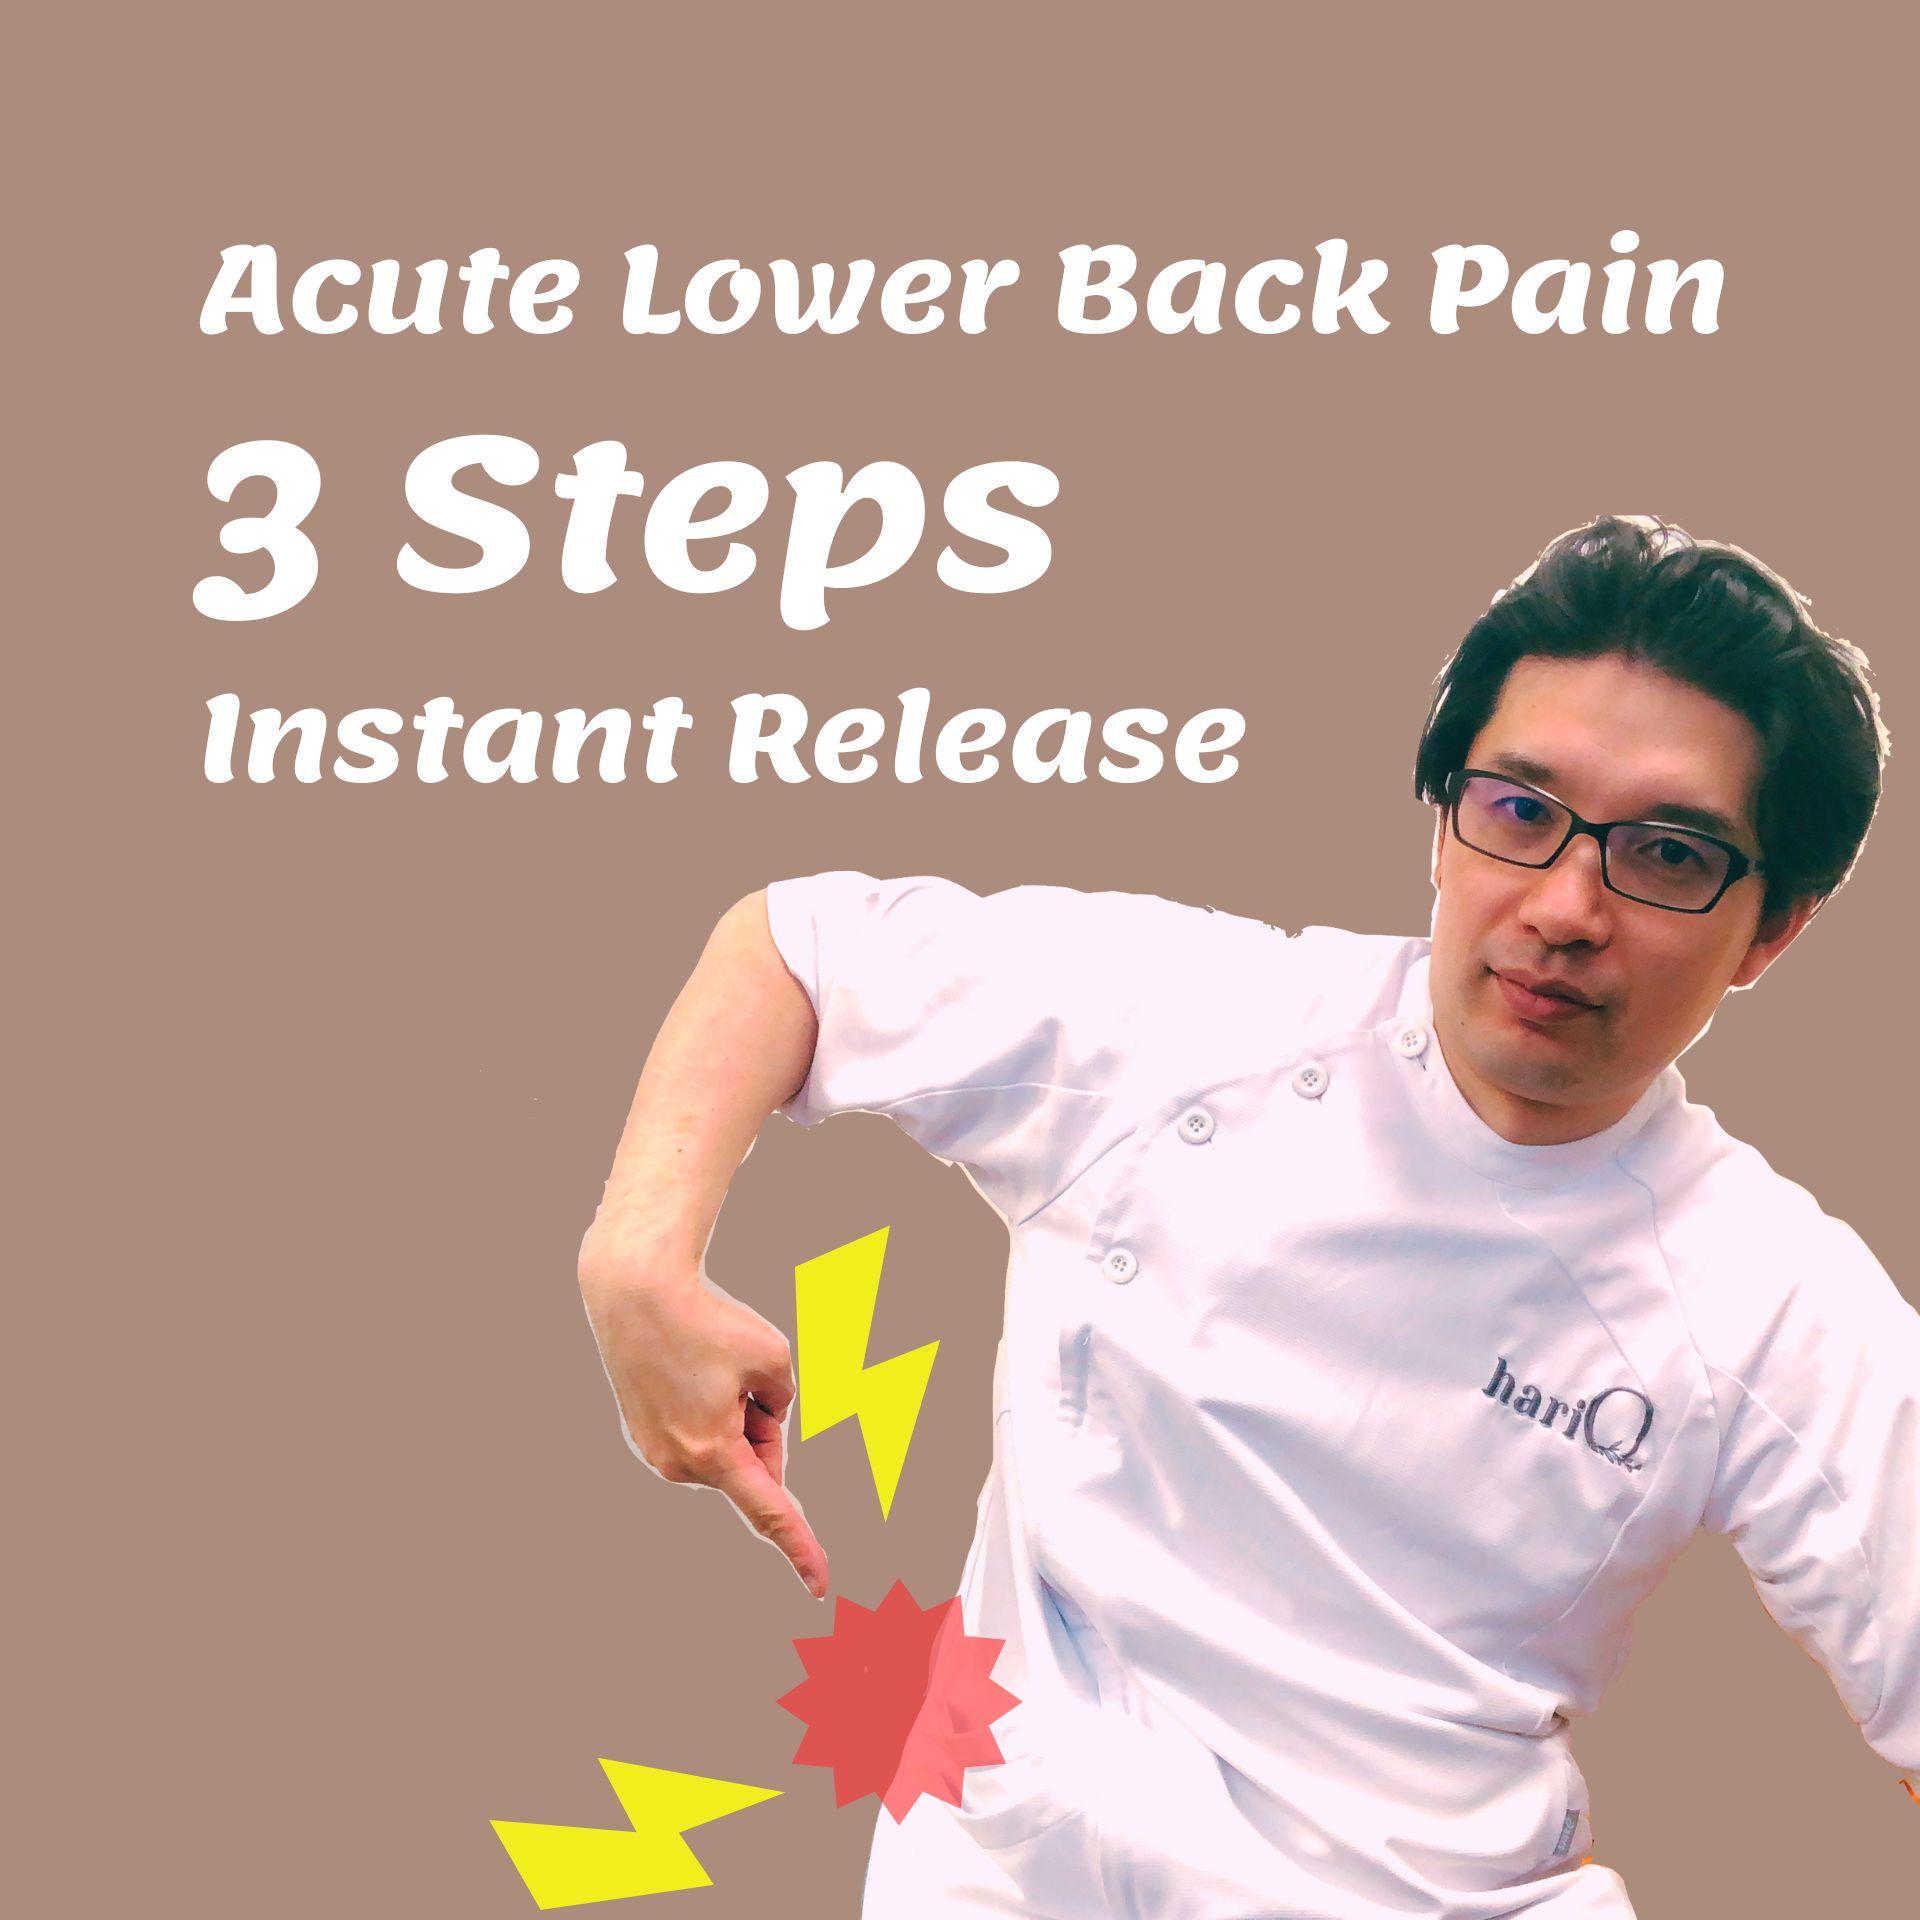 Acute Lower Back Pain 3 Steps